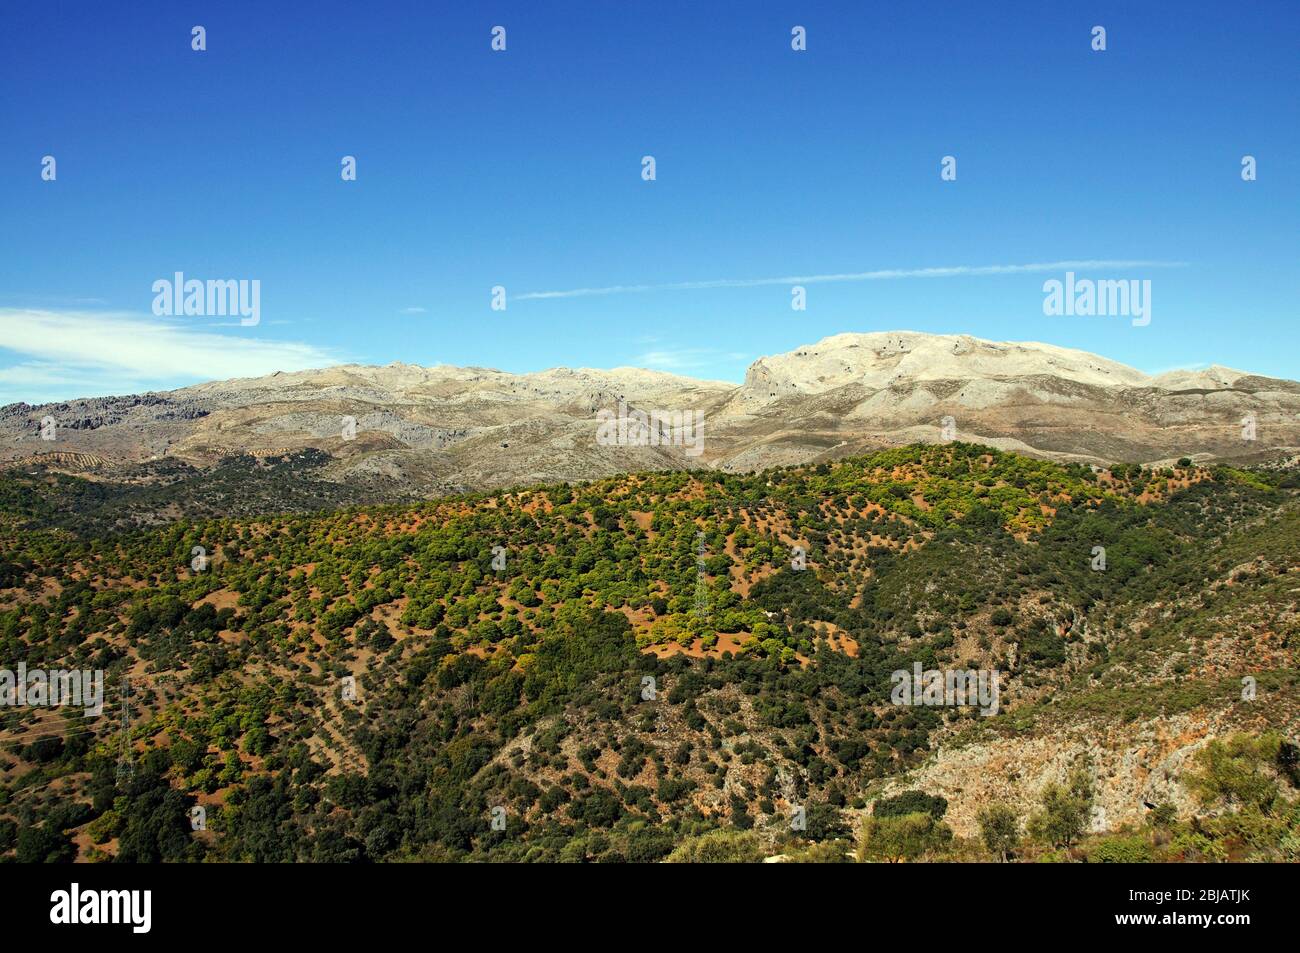 Forest of chestnut trees, Igualeja, Serrania de Ronda, Malaga Province, Andalucia, Spain, Western Europe. Stock Photo